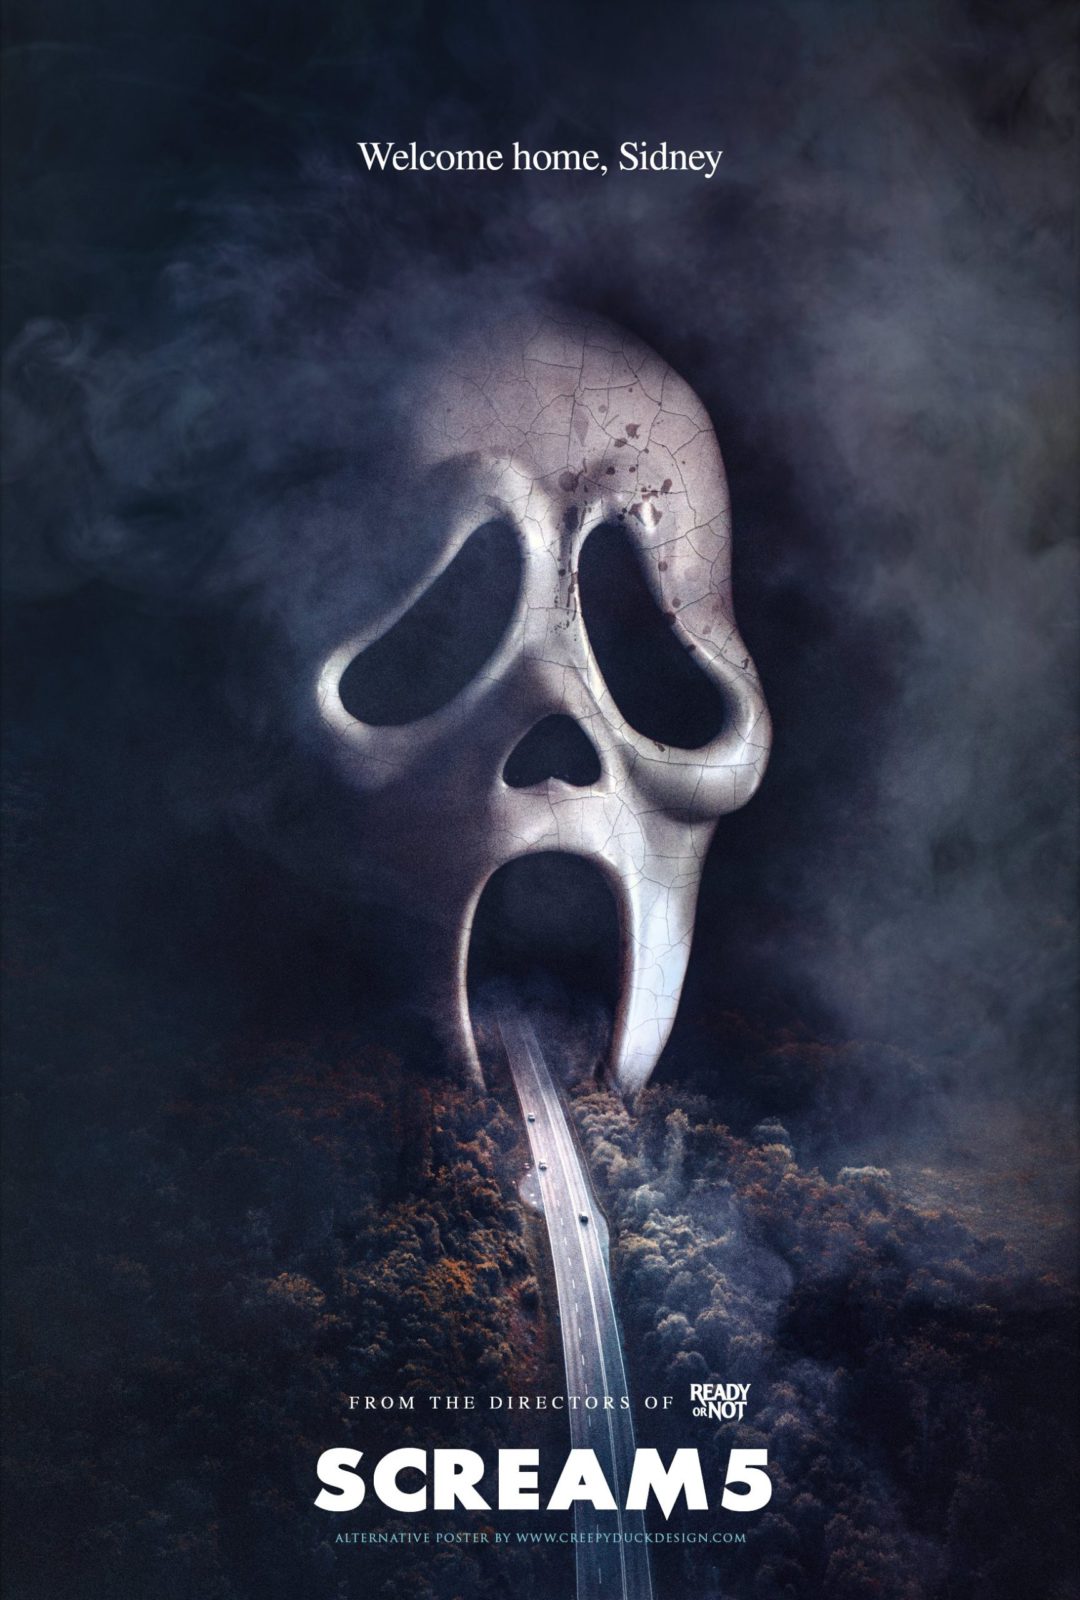 Scream 5 Continues Filming Despite 3 Positive COVID Tests